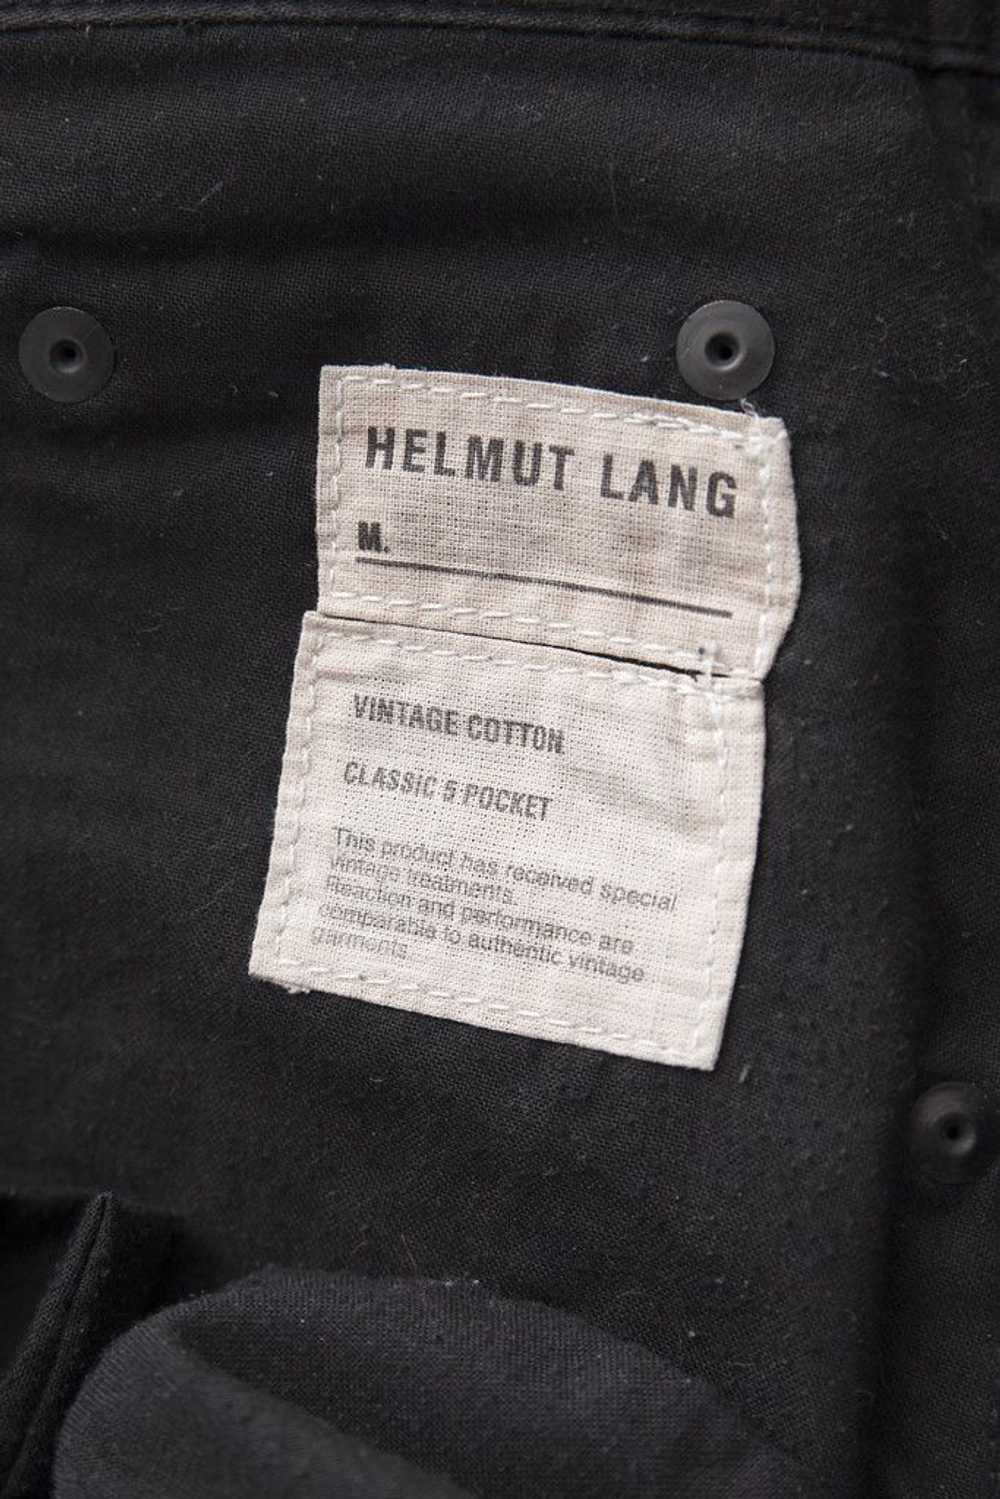 Helmut Lang AW04 5 pockets cargo pants - image 9